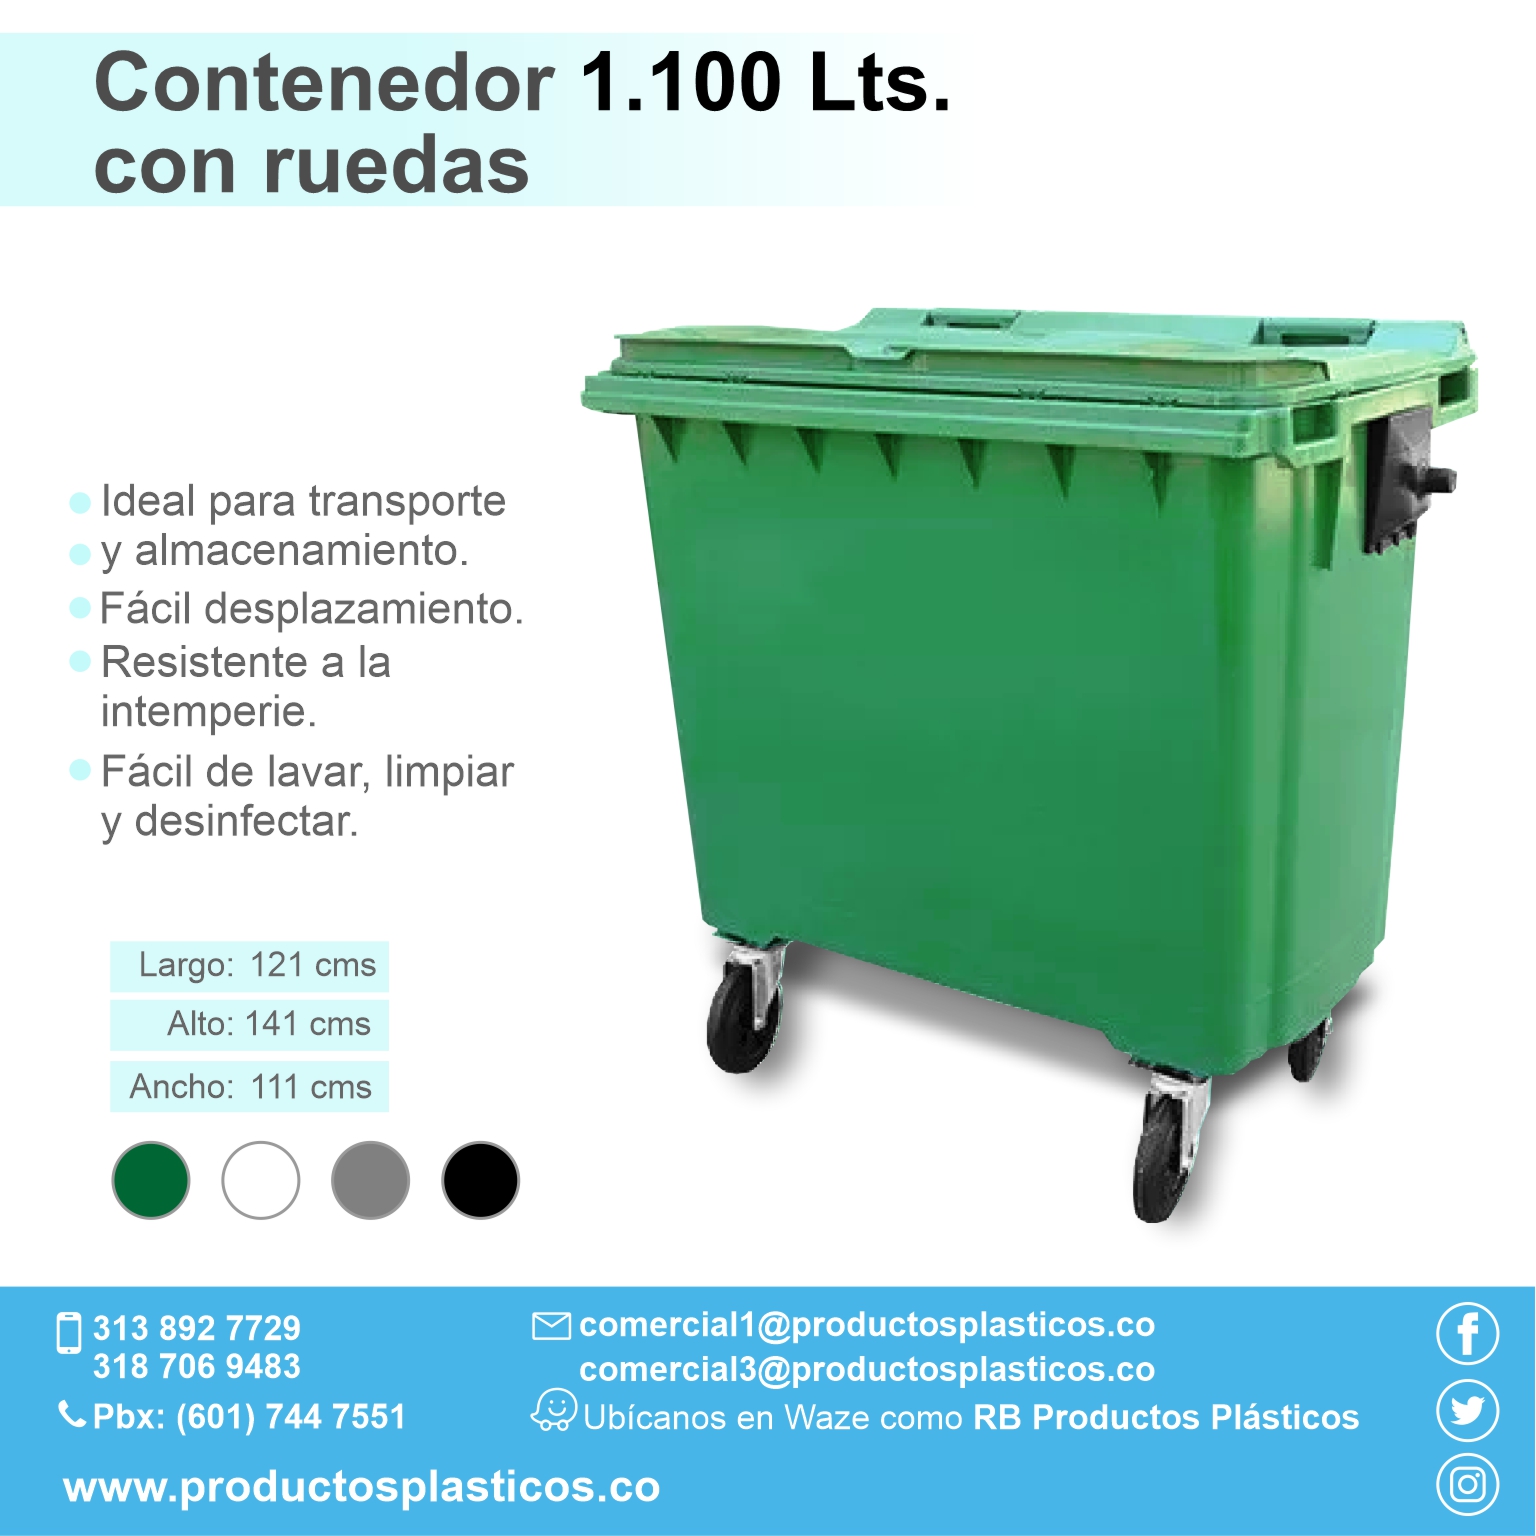 Contenedores para residuos - Plásticos de 1100 litros - 4 ruedas